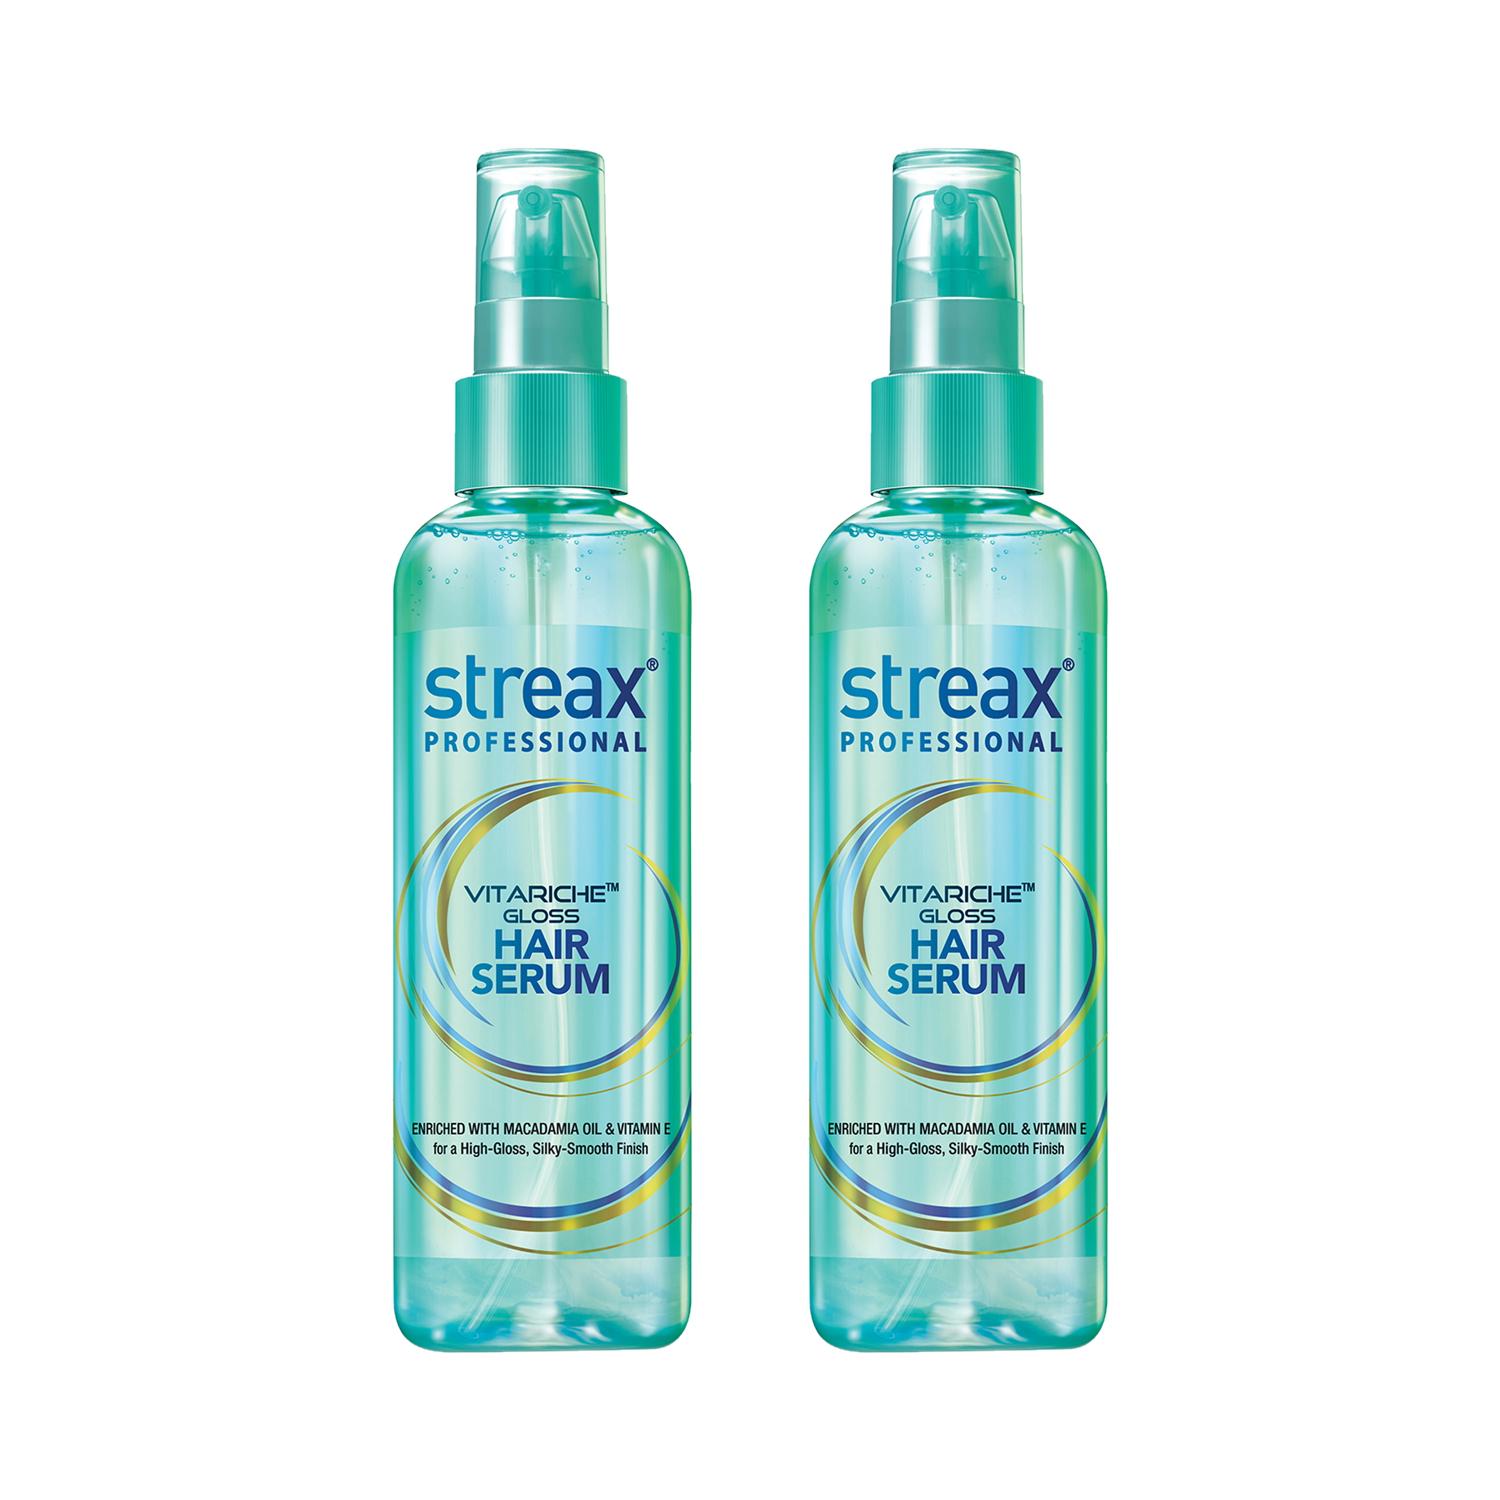 Streax Professional | Streax Professional Vitariche Gloss Hair Serum (45ml) - (Pack of 2) Combo